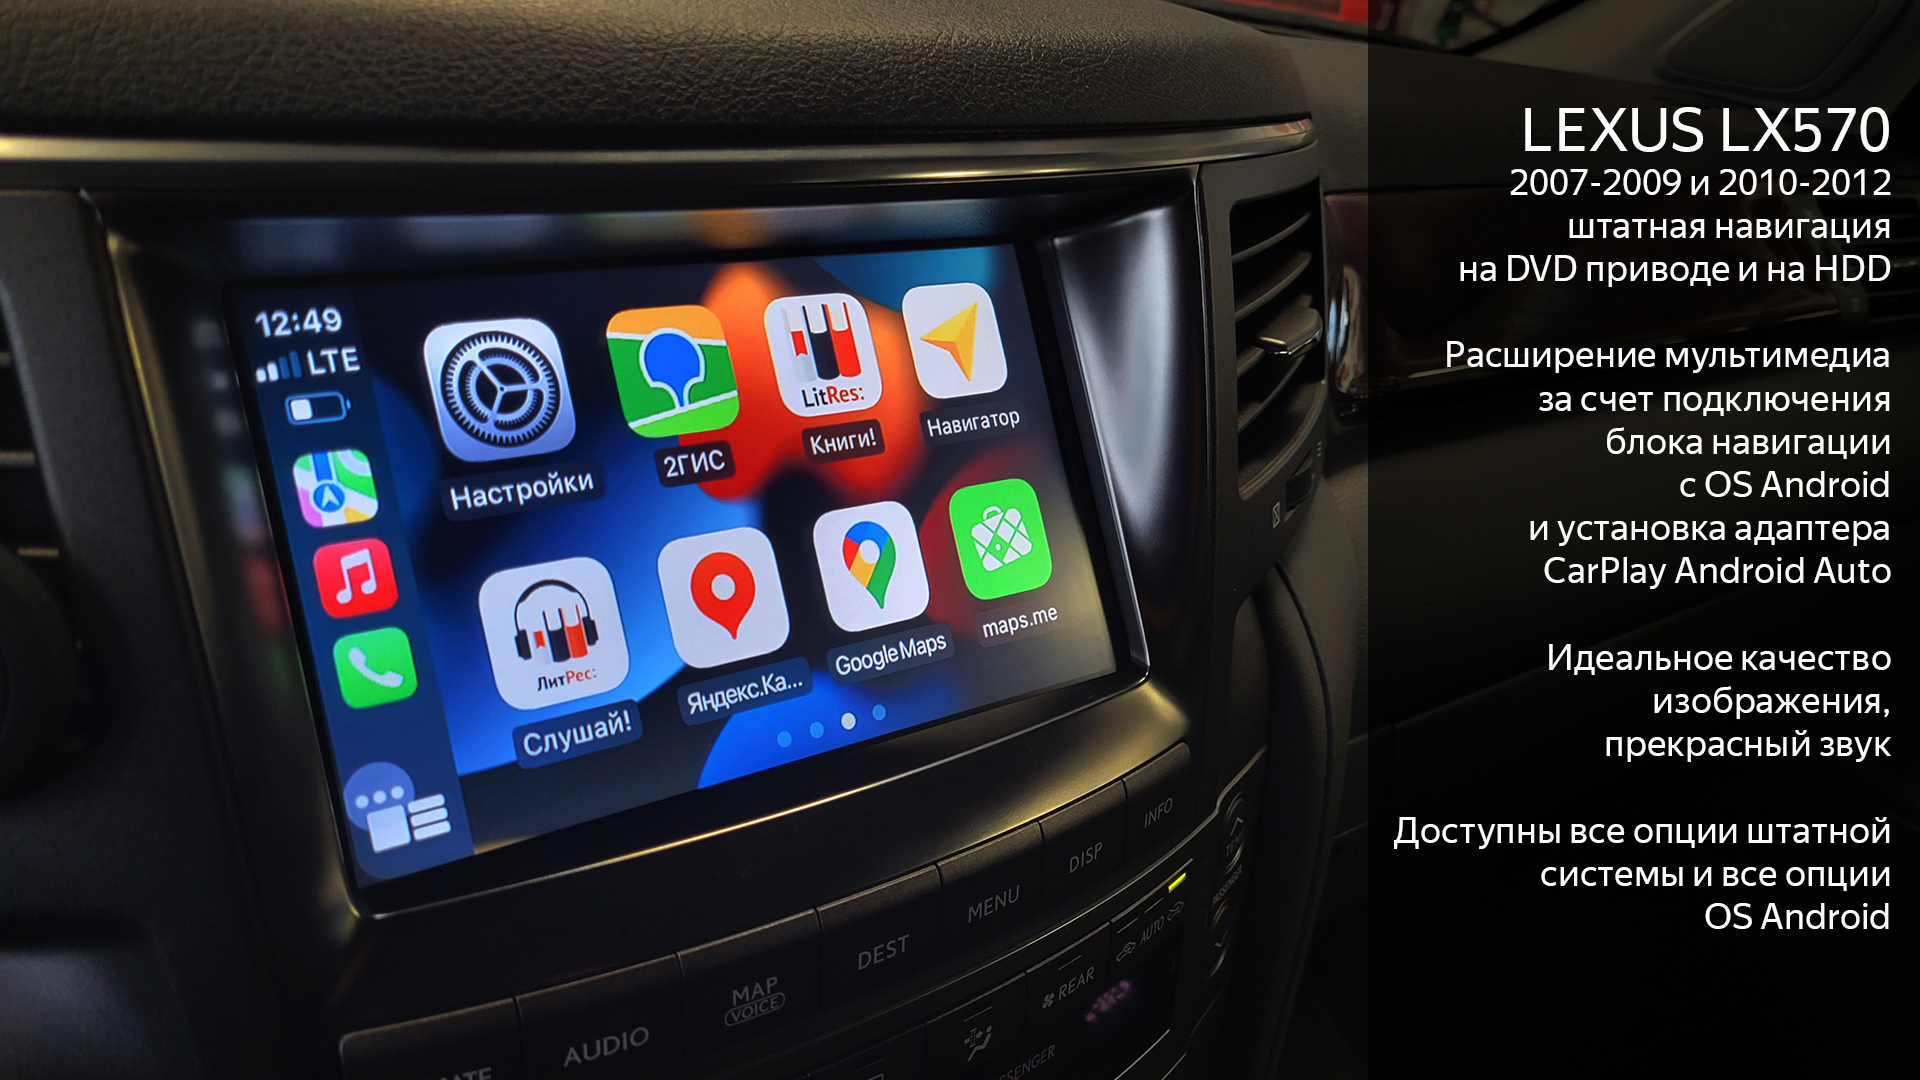 Lexus LX570 2007-2009 и 2010-2012 подключение системы Android и CarPlay Android Auto.mp4